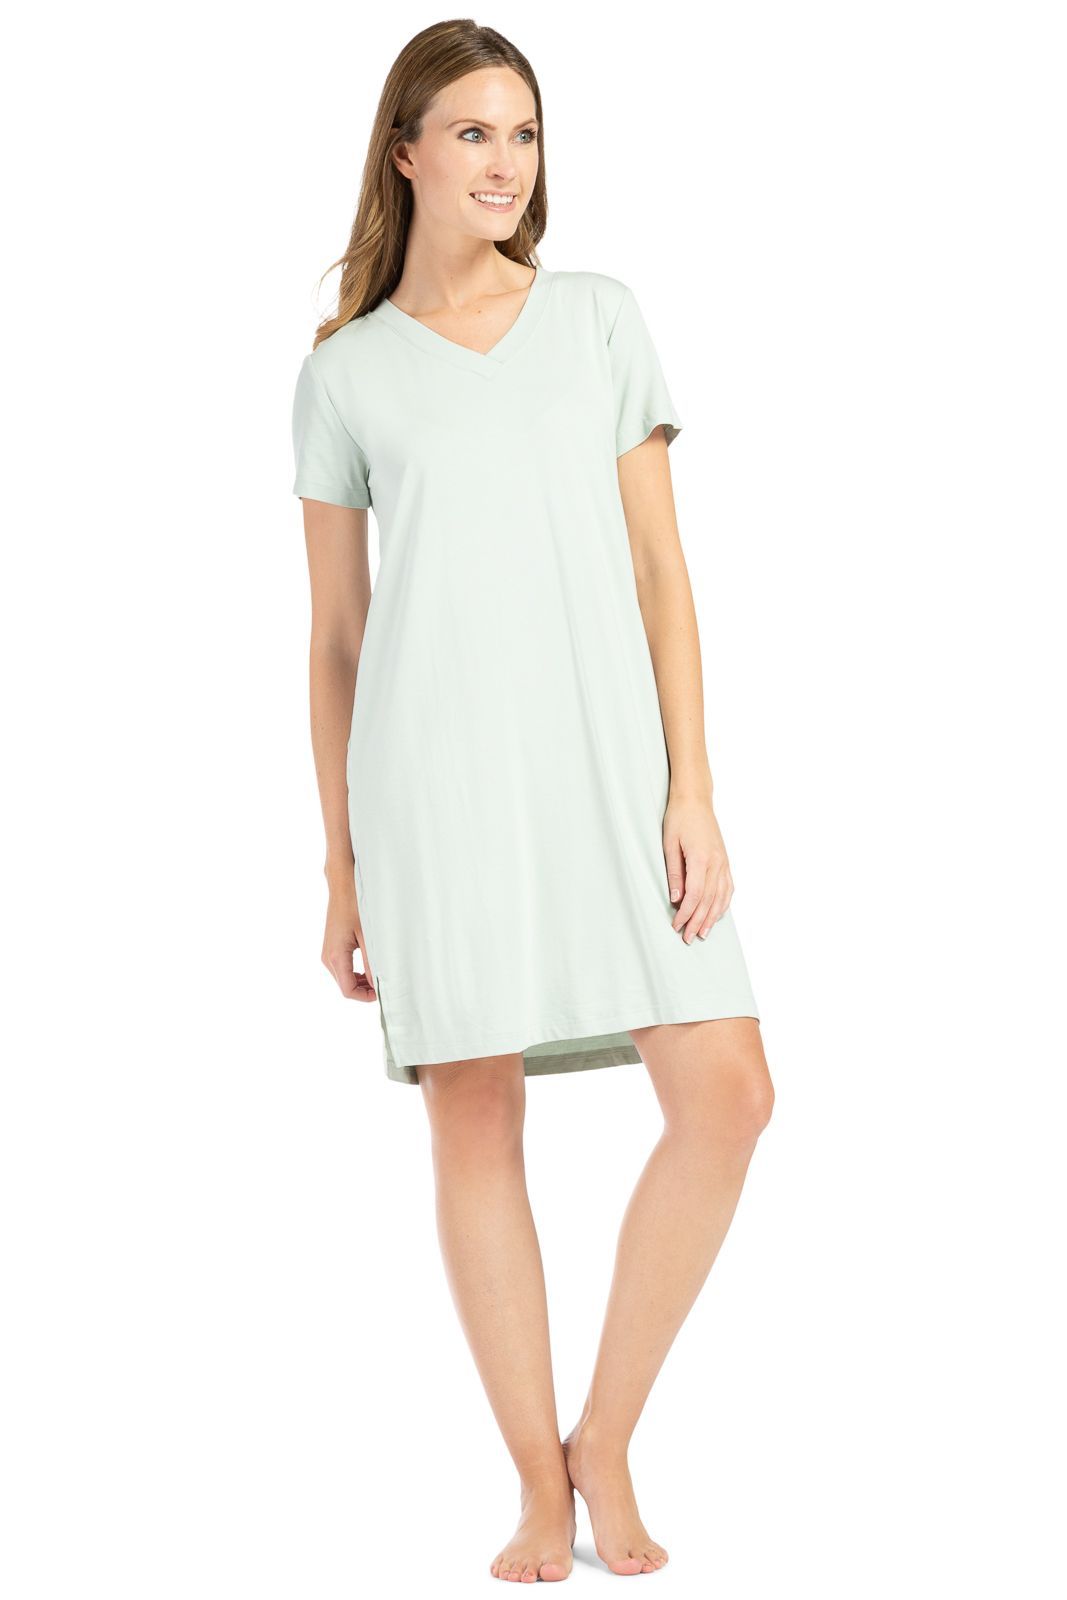 Buy 100% Cotton Nightgown Romantic Cotton Nightgown Long Cotton